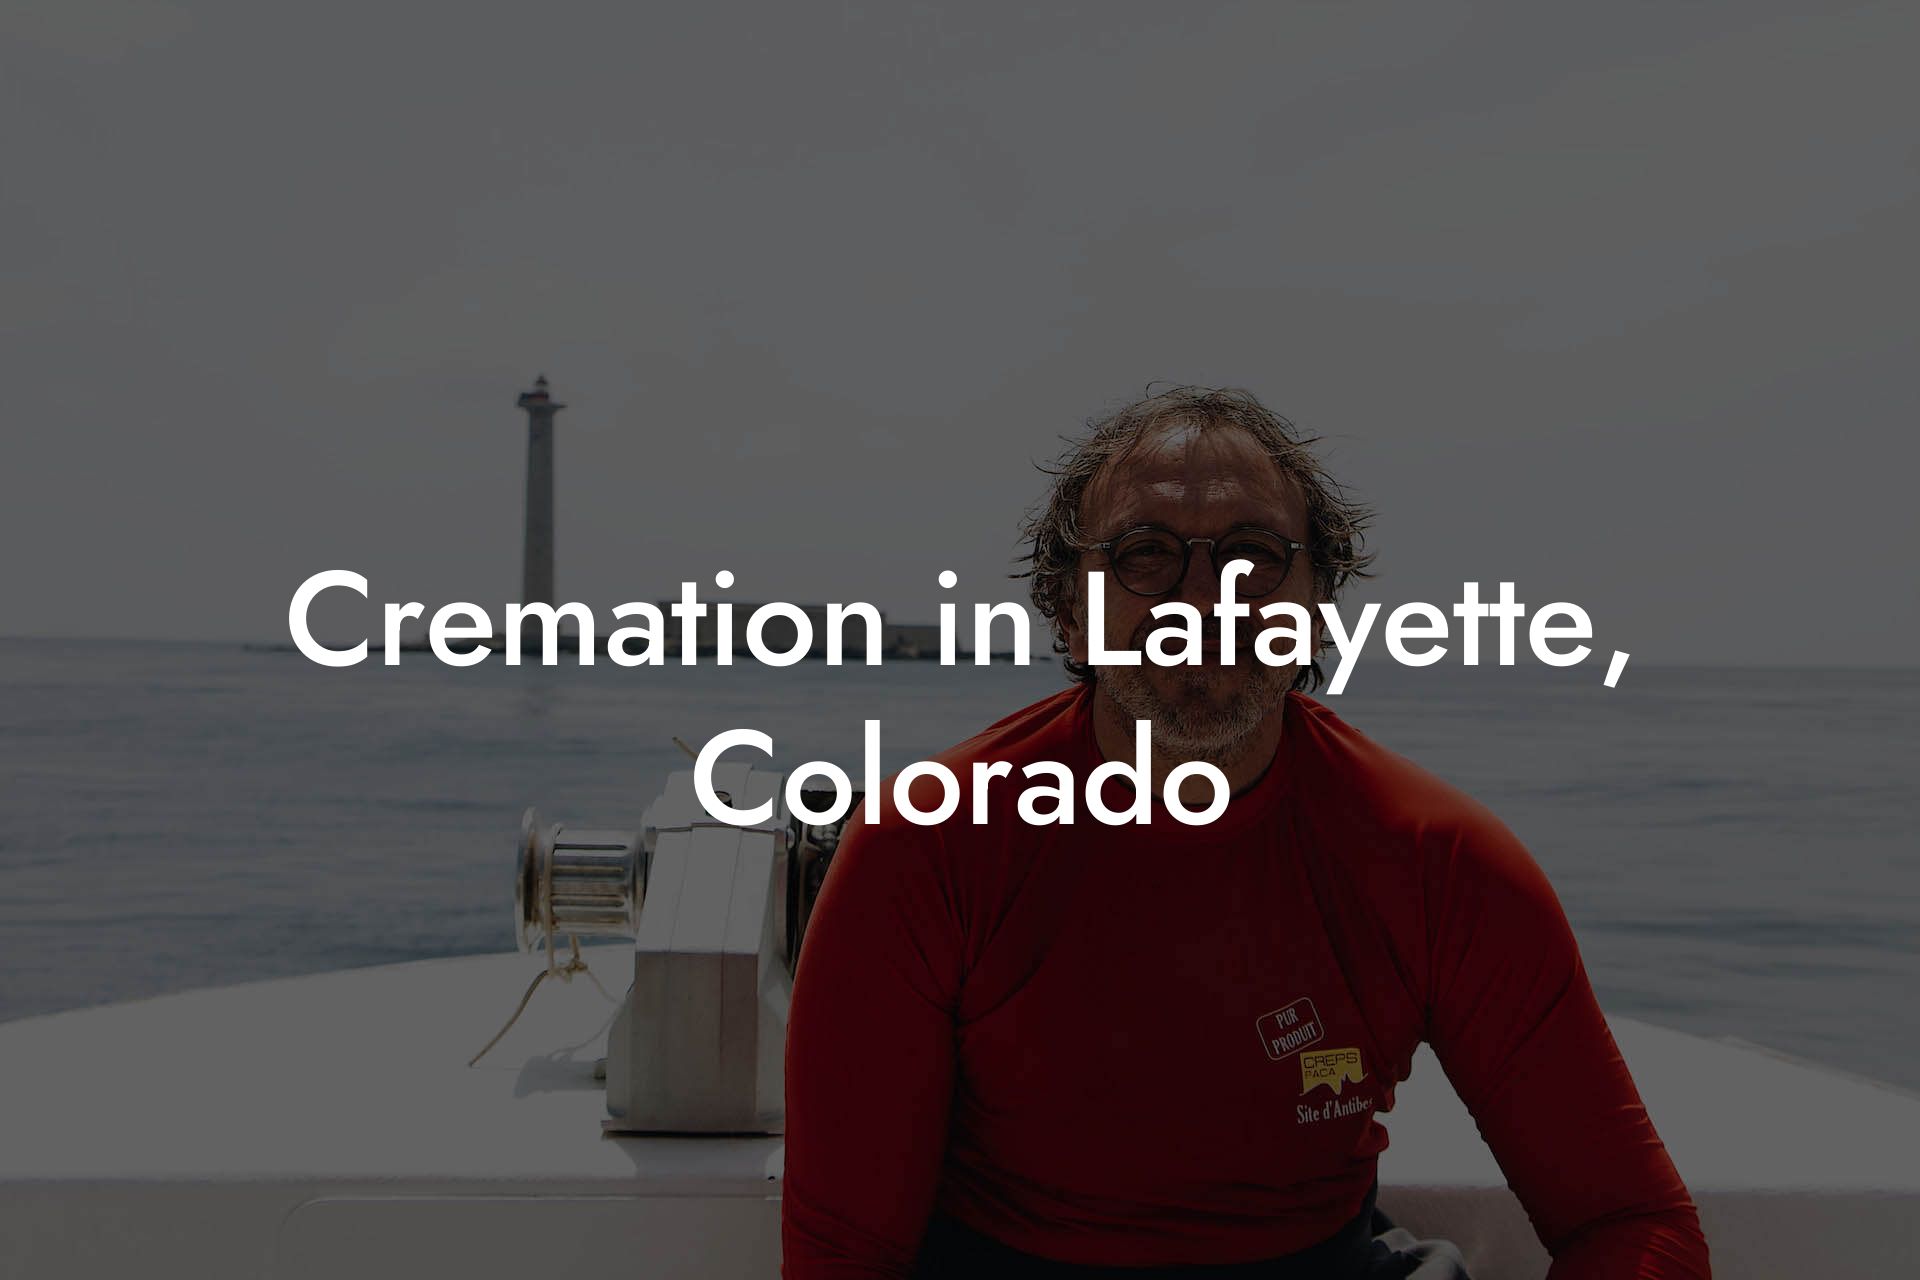 Cremation in Lafayette, Colorado